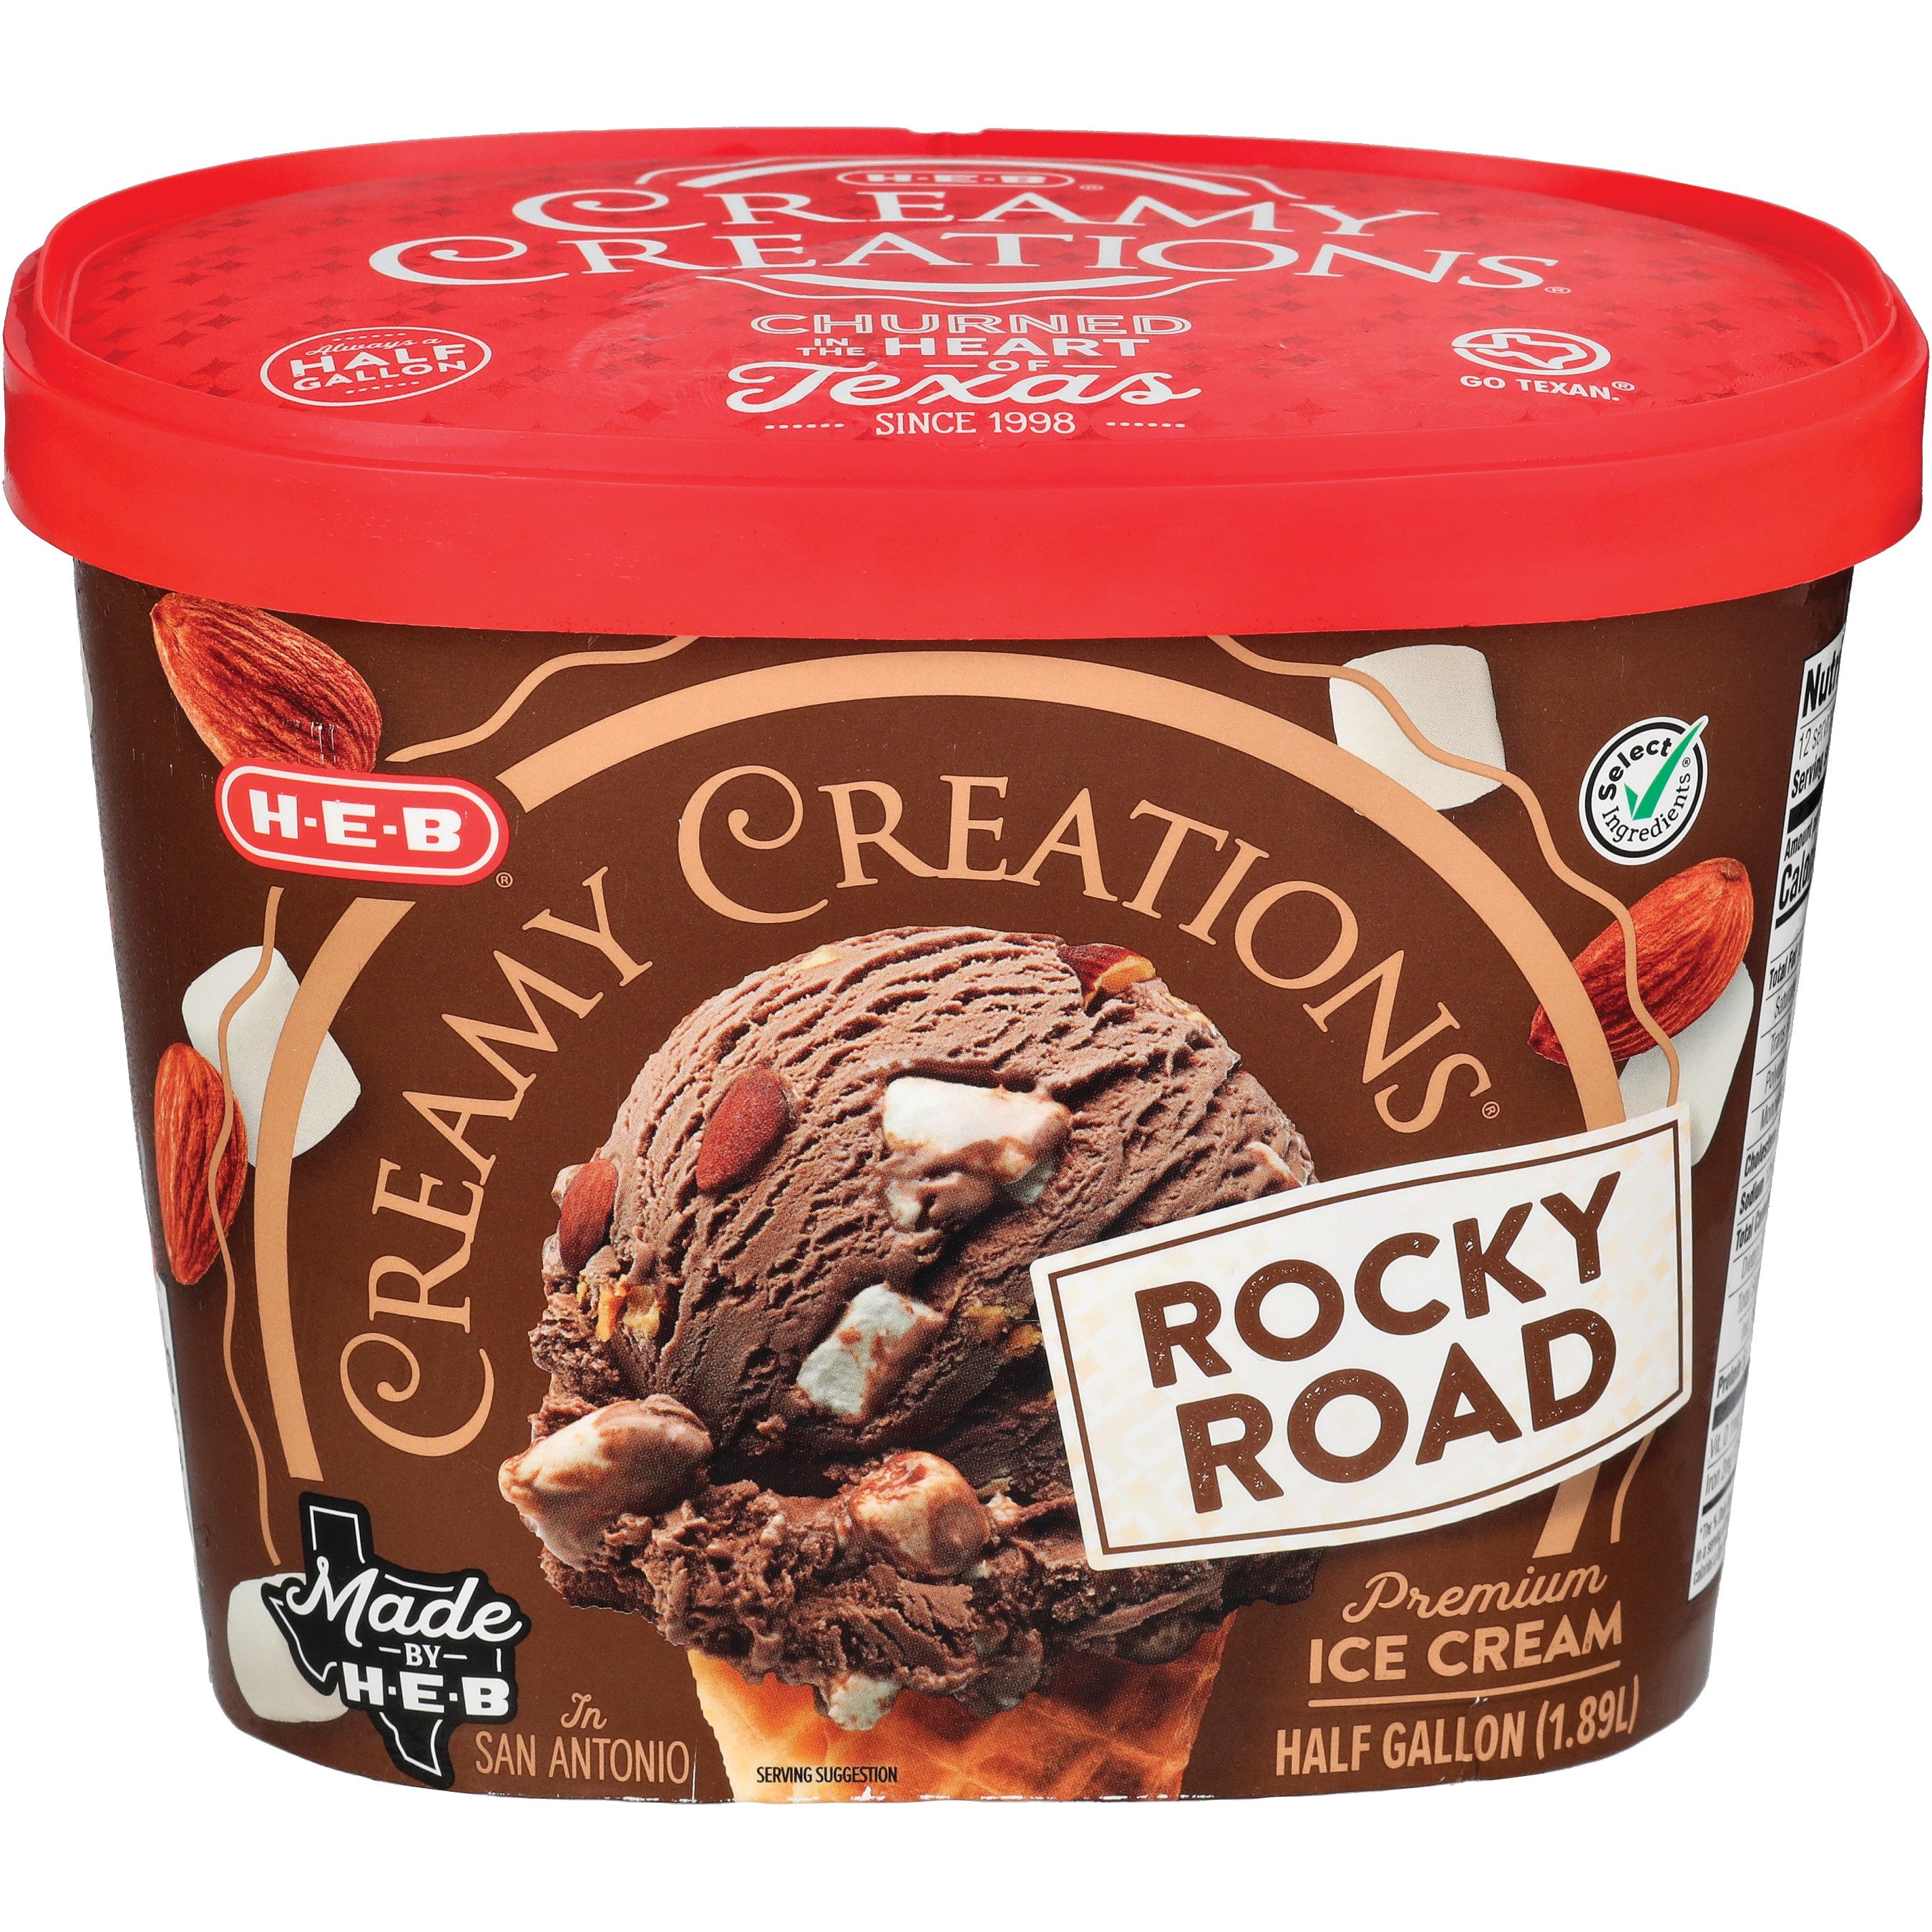 HEB Creamy Creations Rocky Road Ice Cream Shop Ice Cream at HEB